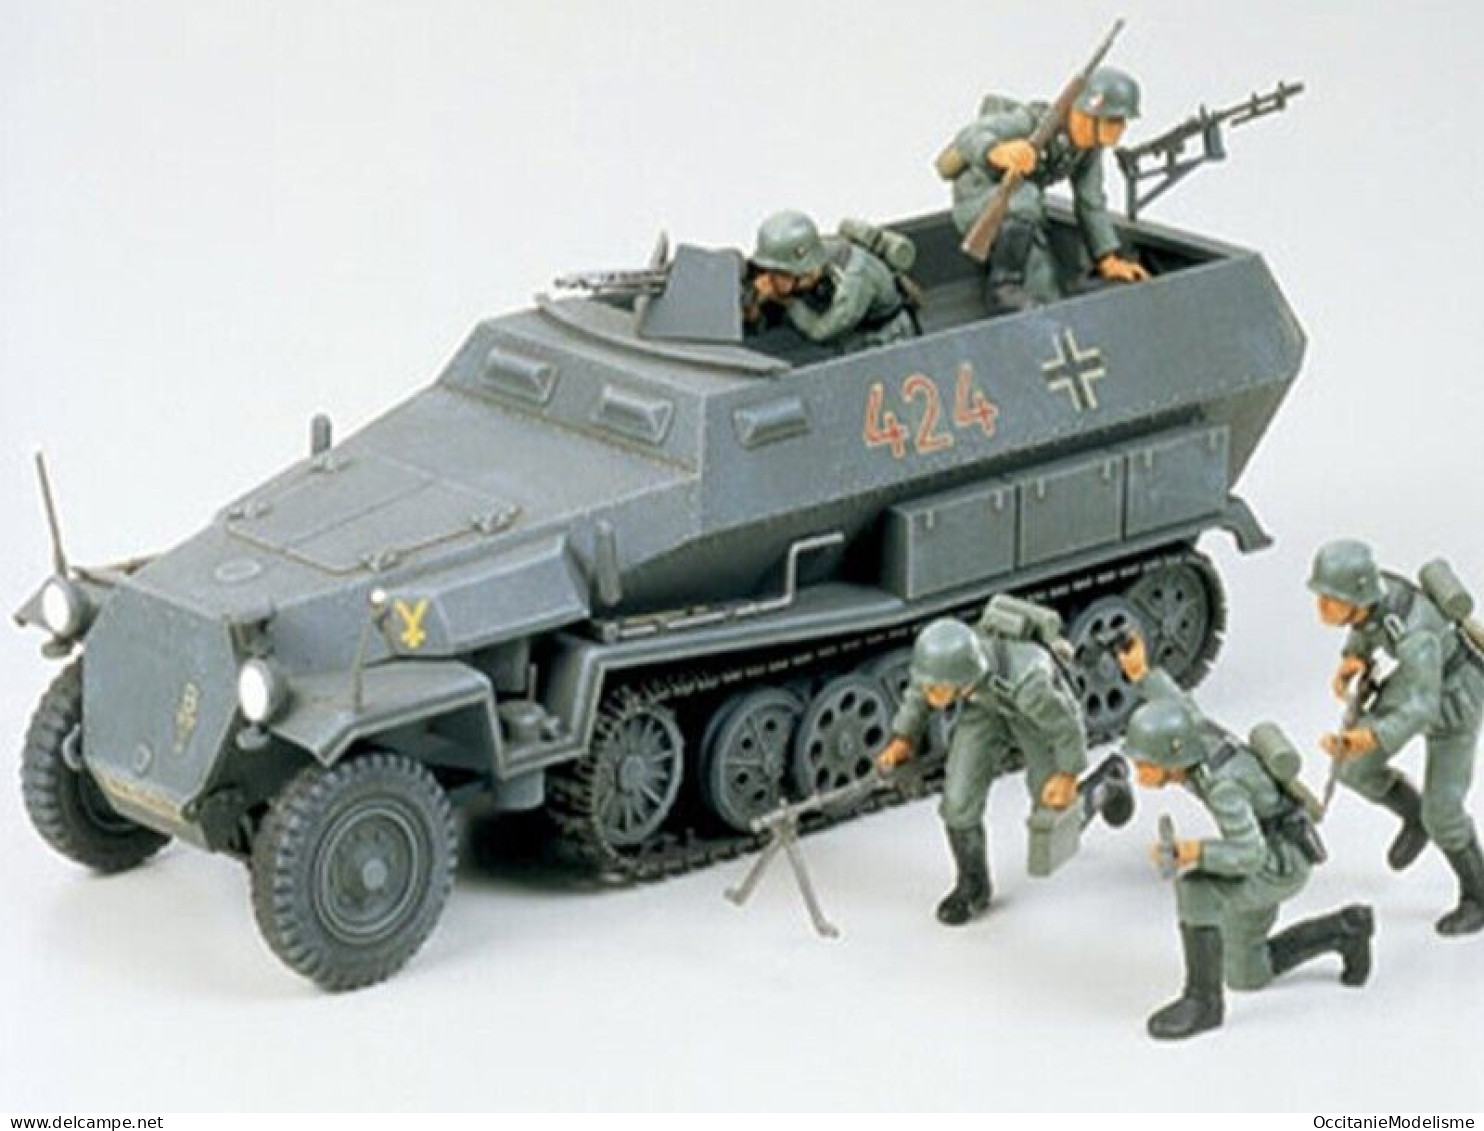 Tamiya - HANOMAG Sdkfz 251/1 + 5 Figurines WWII Militaire Maquette Kit Plastique Réf. 35020 BO 1/35 - Vehículos Militares